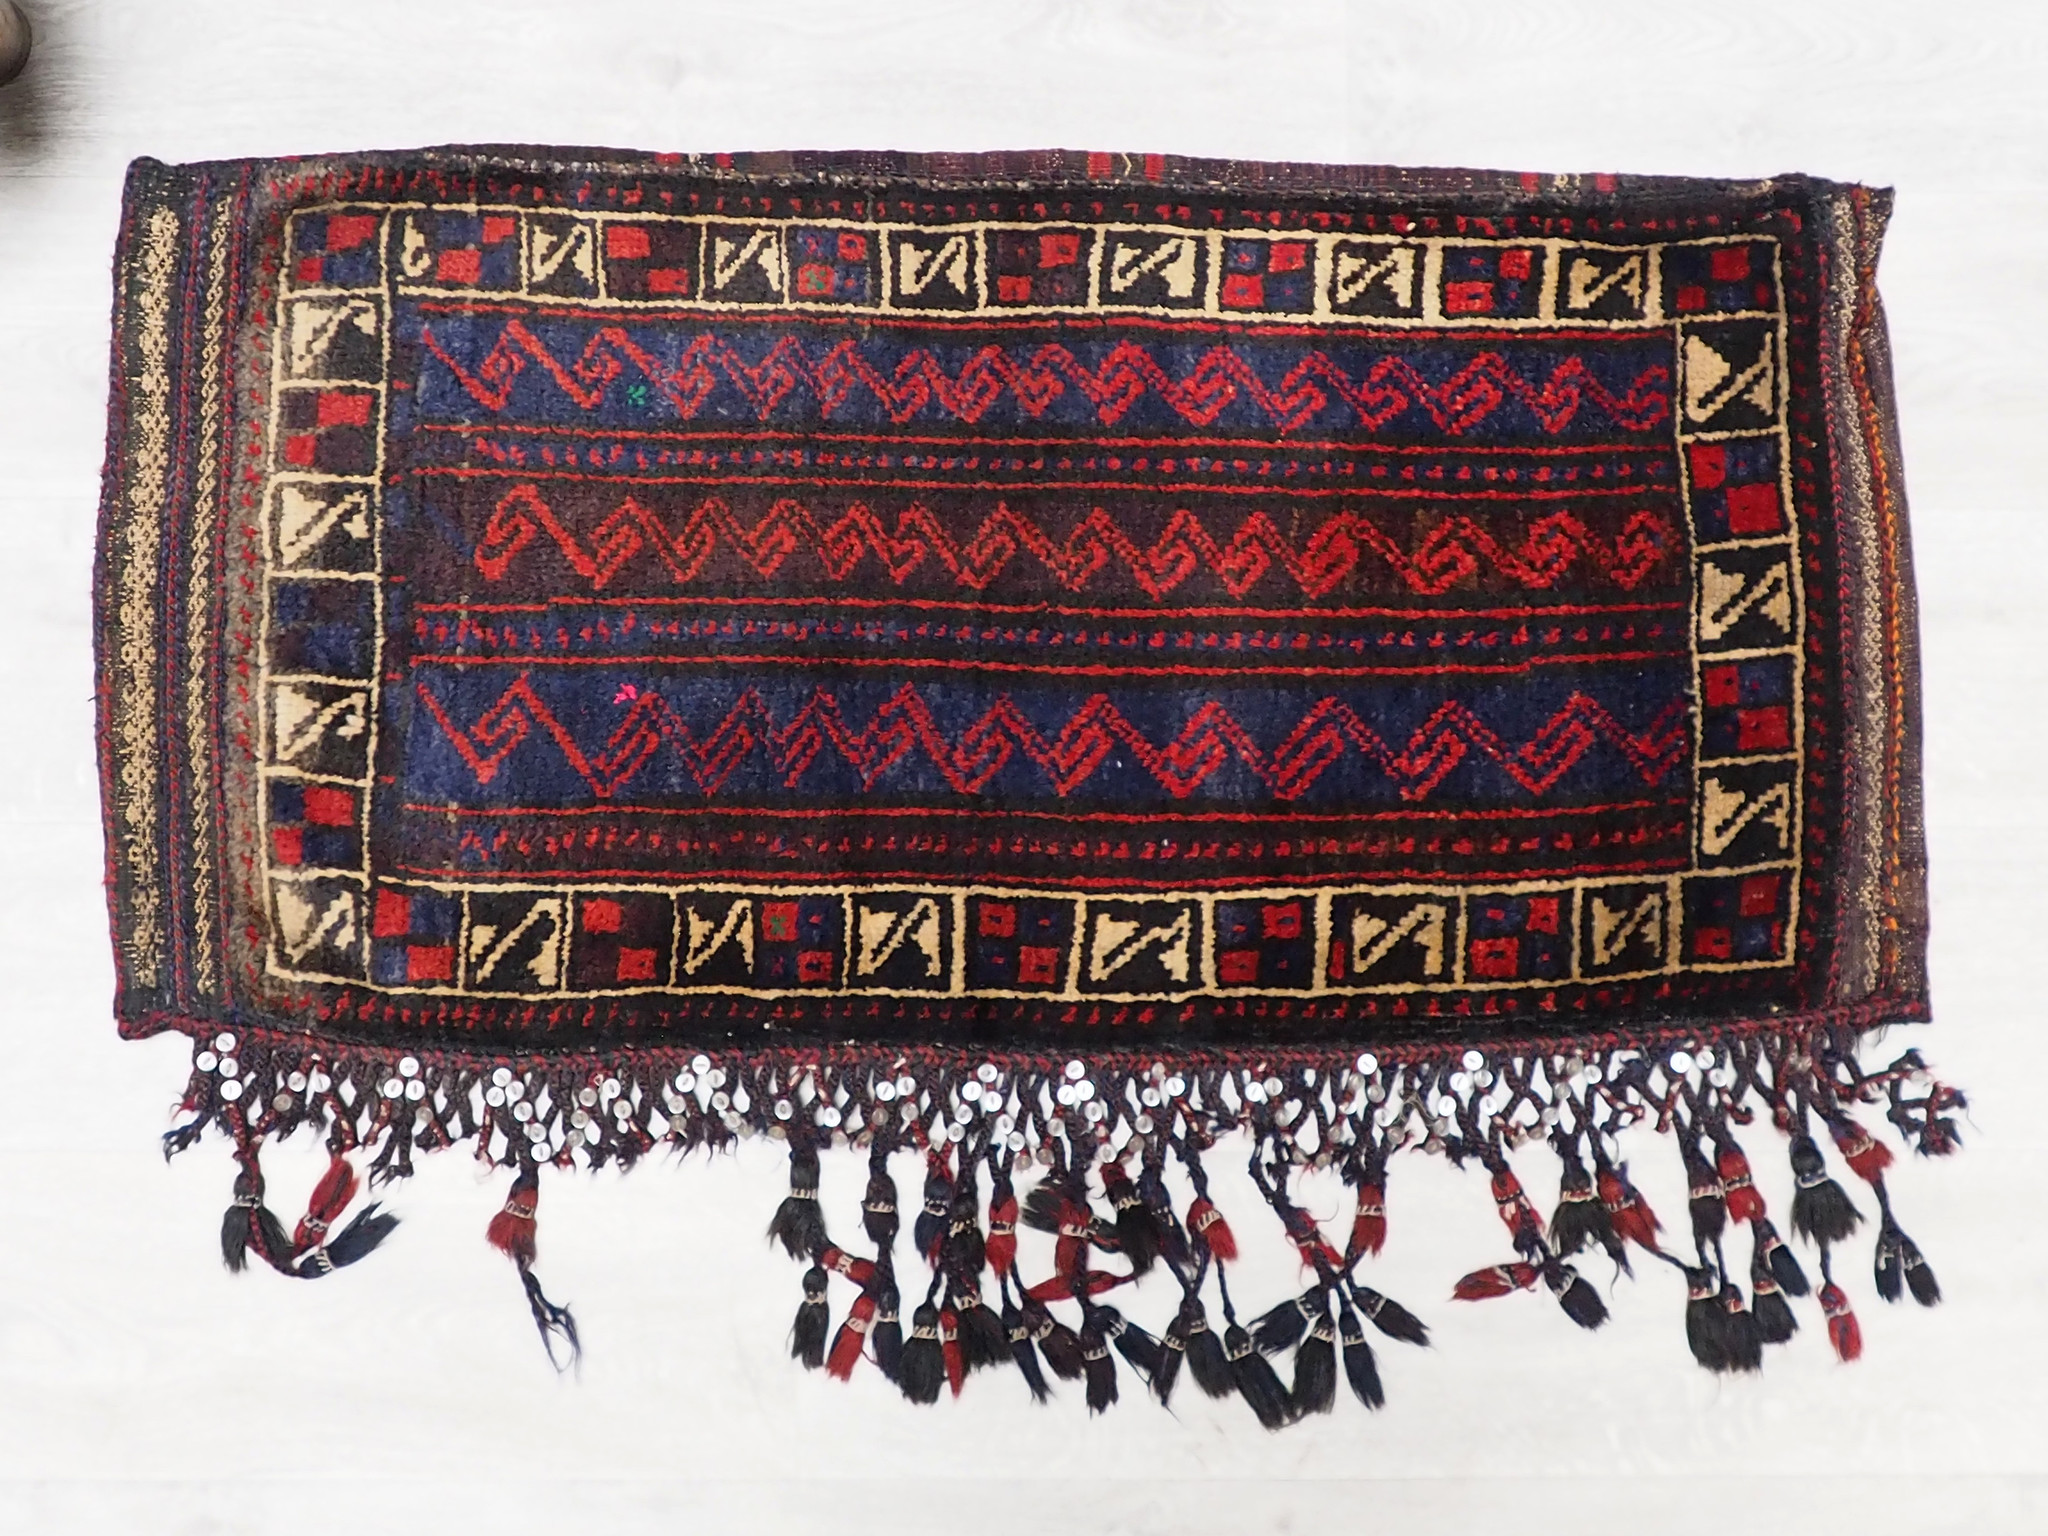 112x54 cm  (44" x 21,2" inch) antique orient Afghan Beloch nomad rug seat floor cushion Bohemian pillow 1001 night  No:22/1